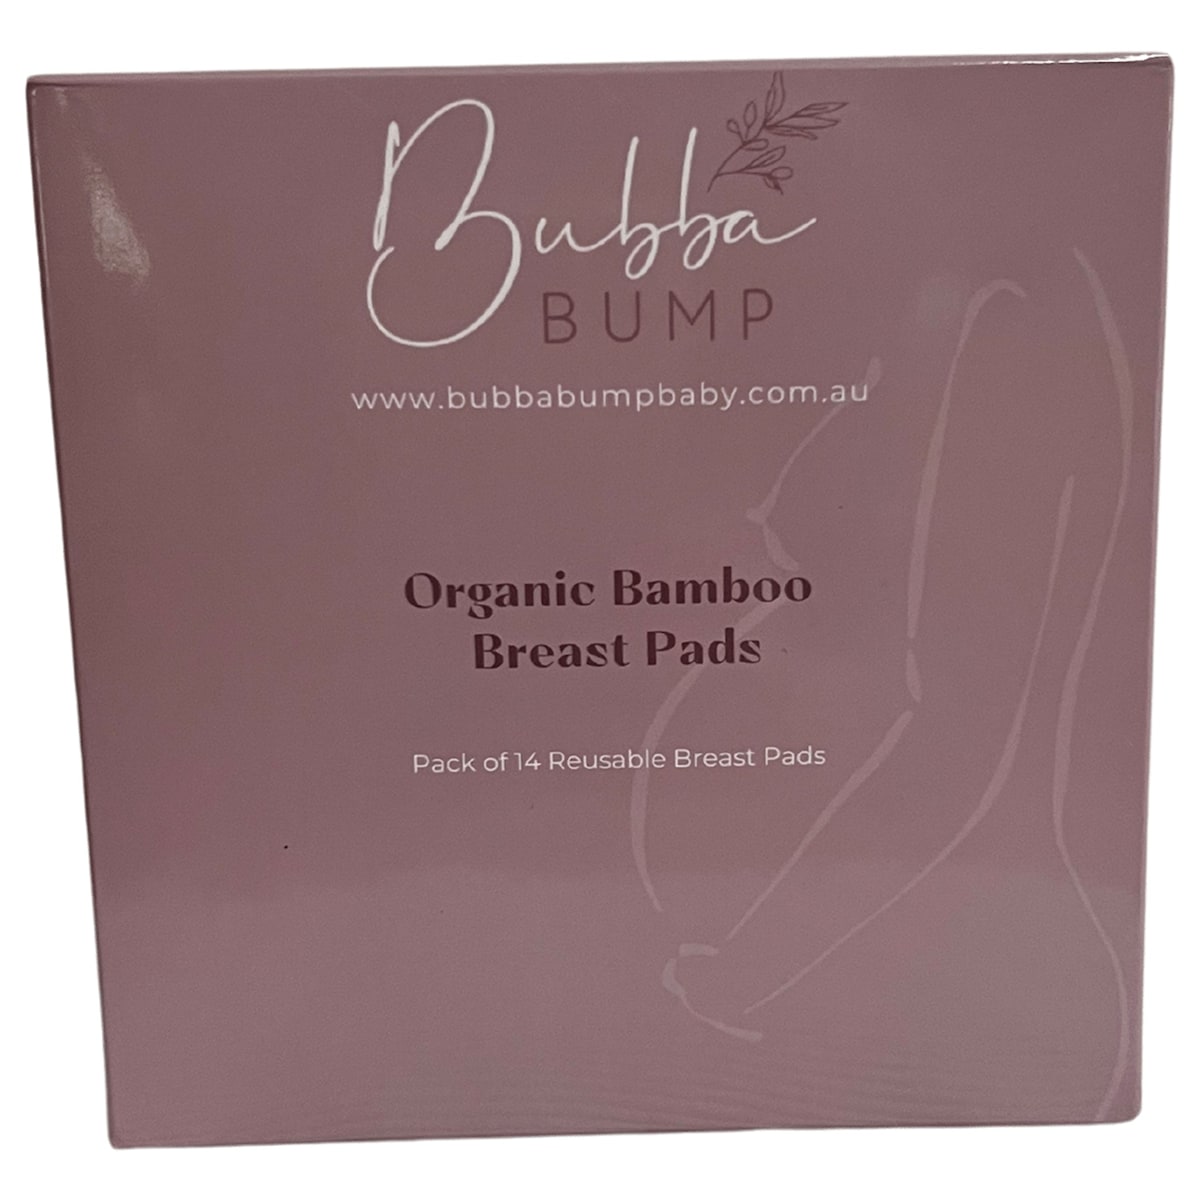 Bubba Bump Organic Bamboo Breast Pads 14 Pack